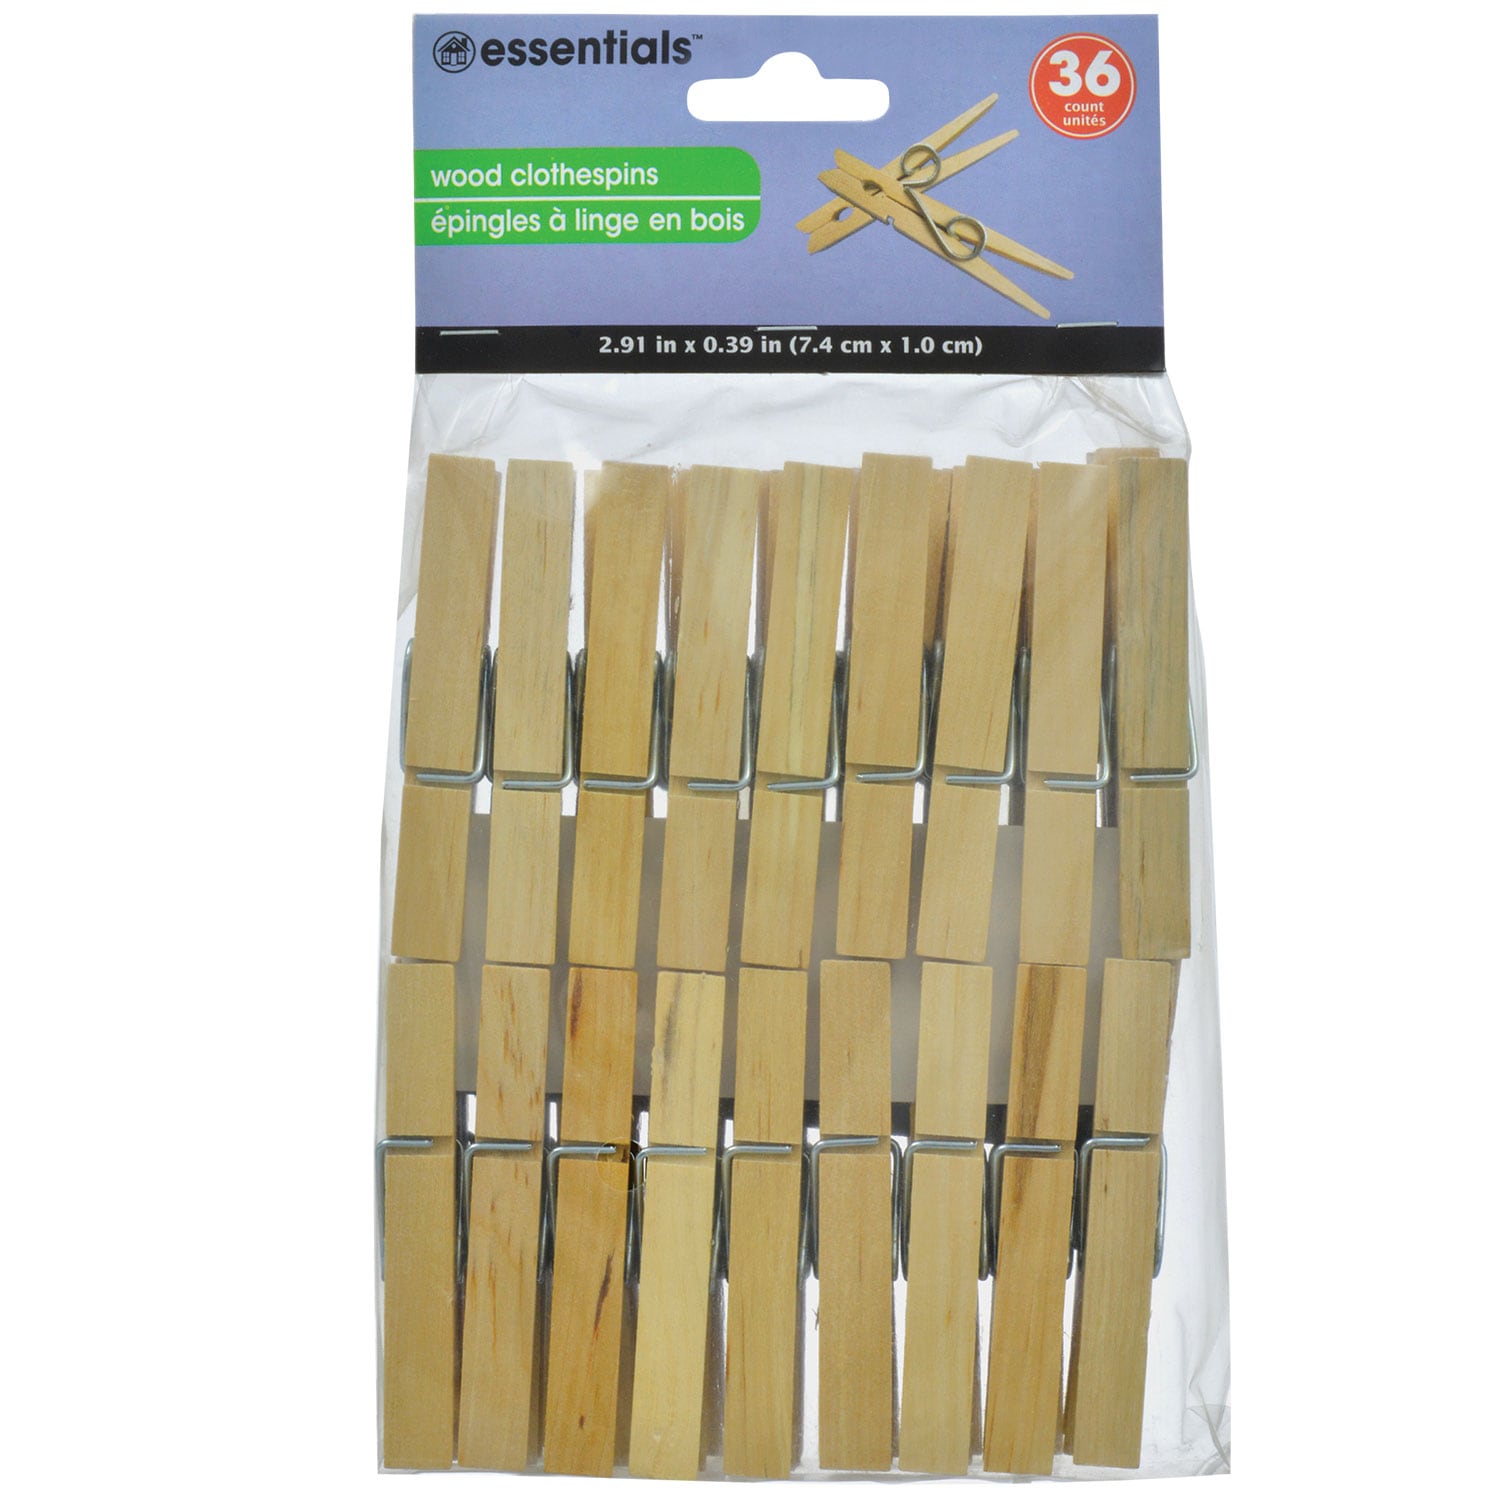 View Essentials Wooden Clothespins, 36-ct. Packs